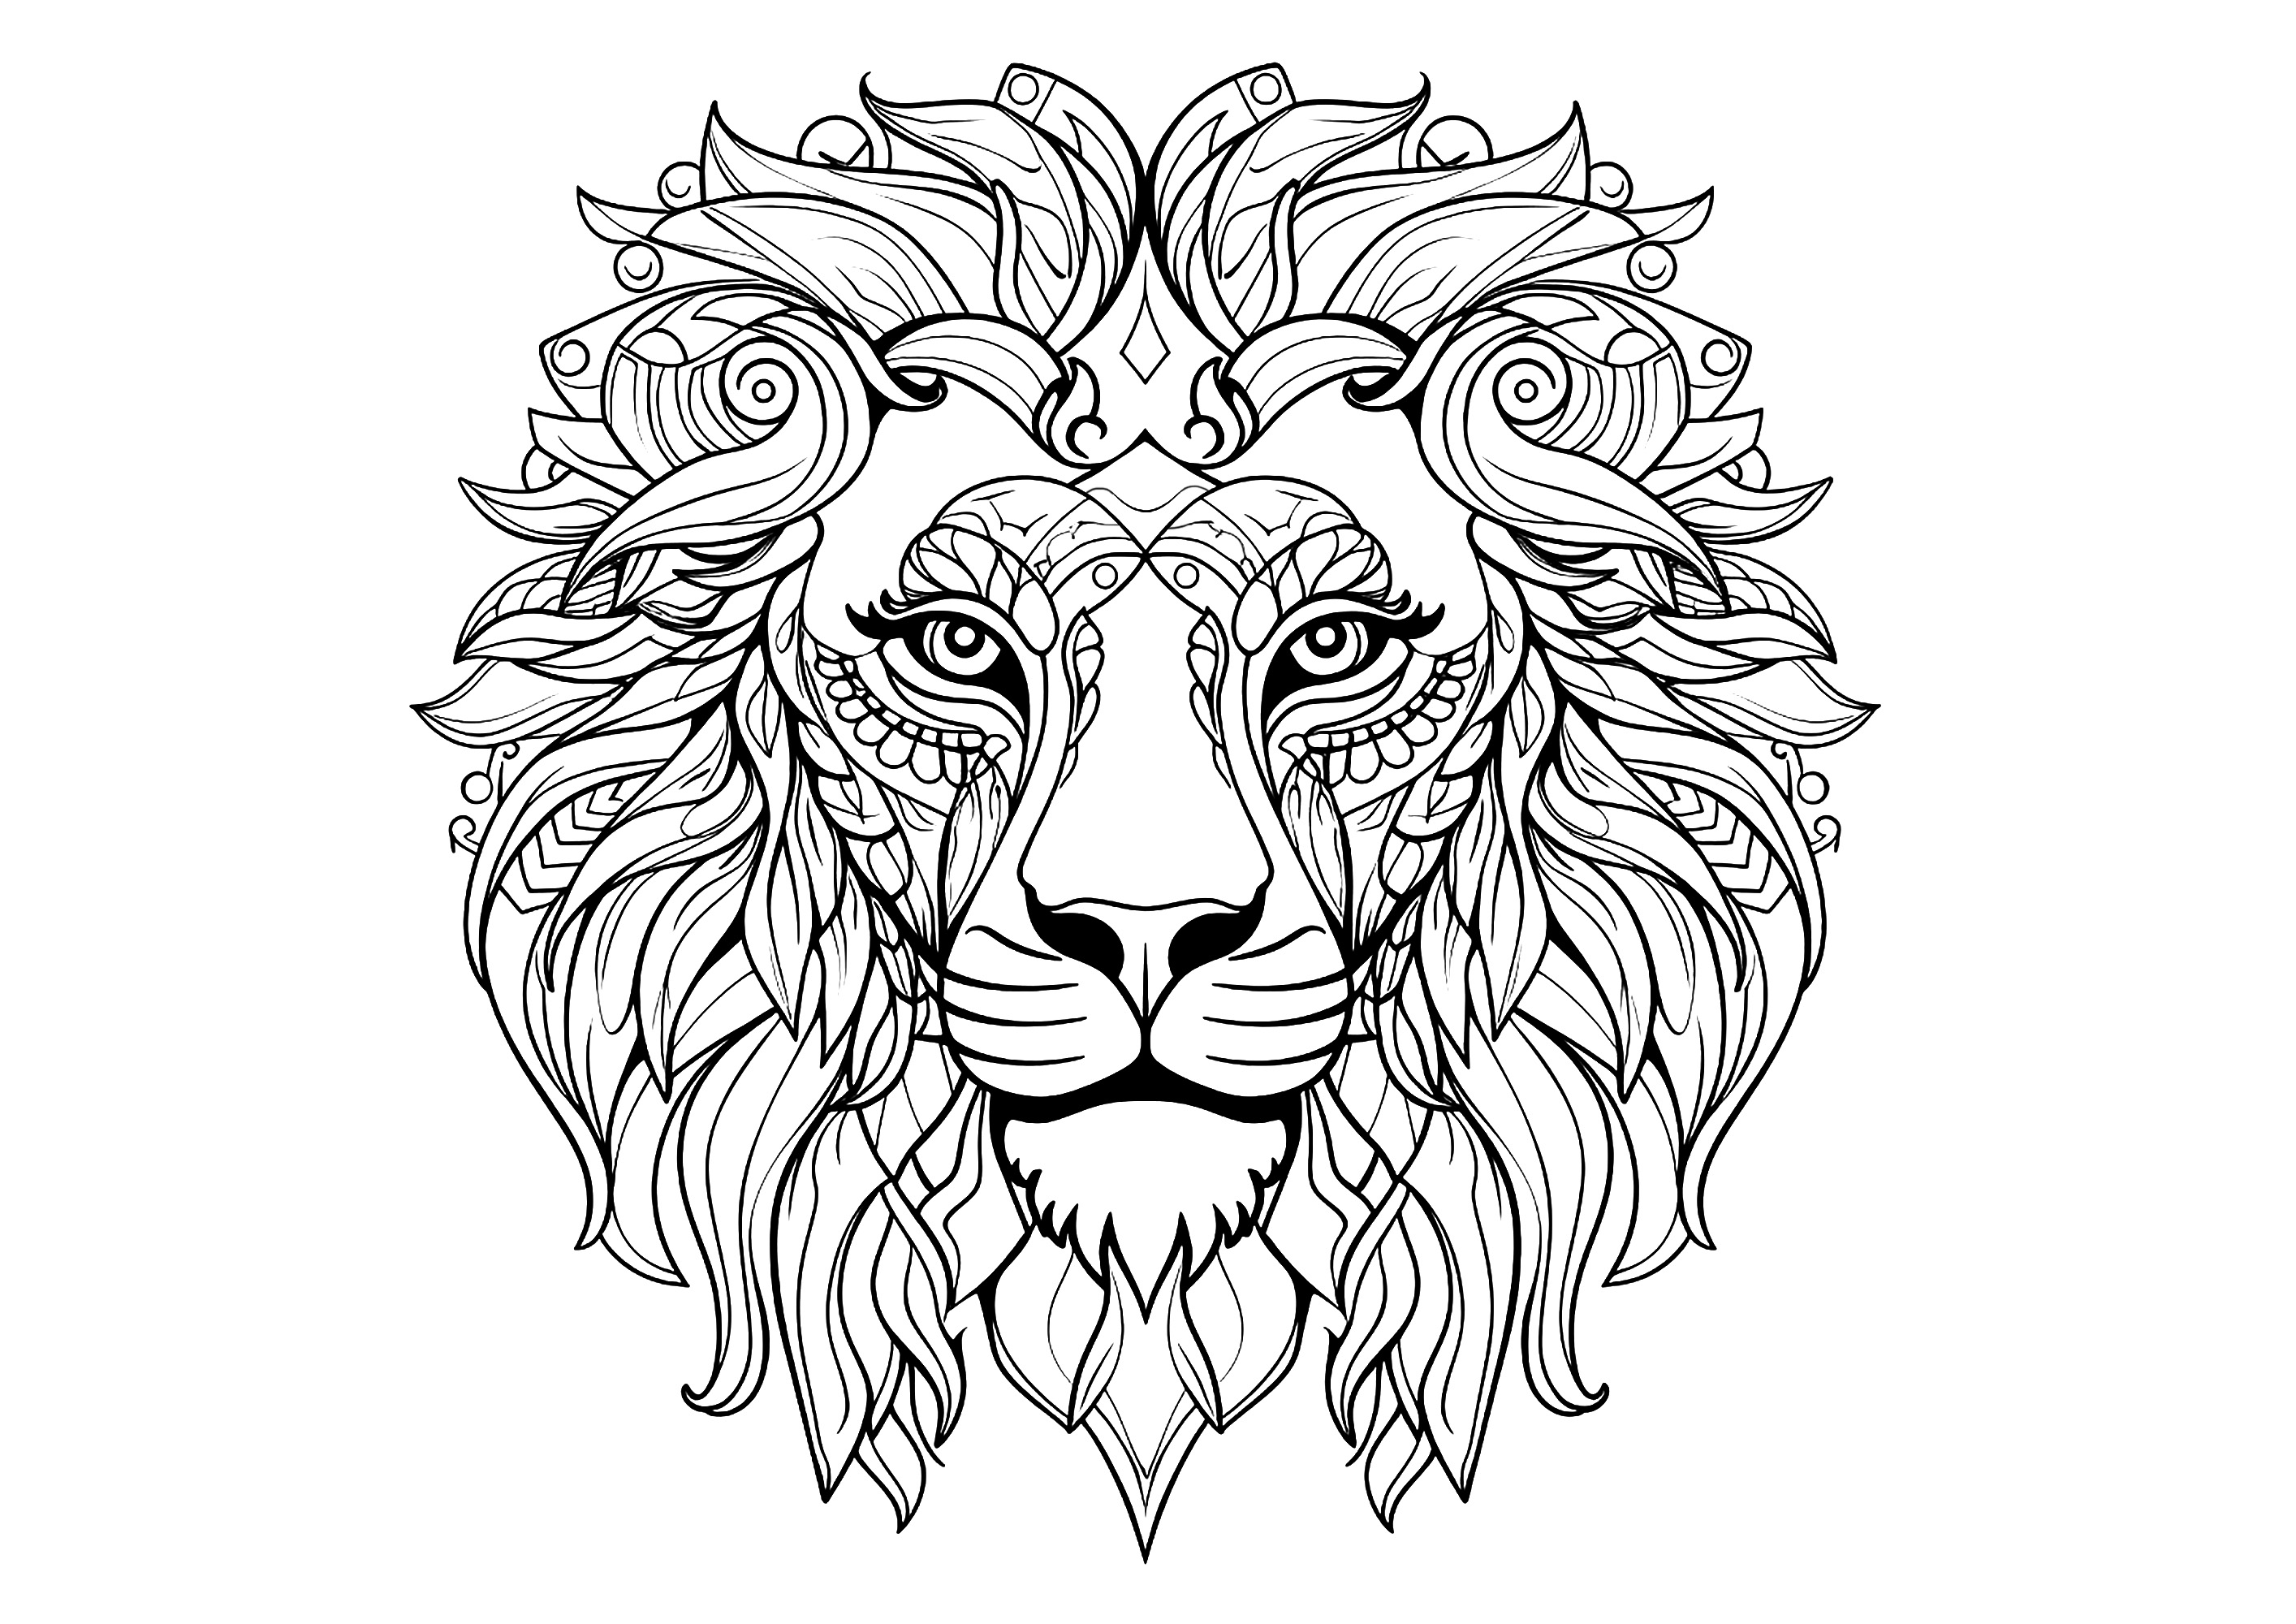 Lion's head and beautiful motifs